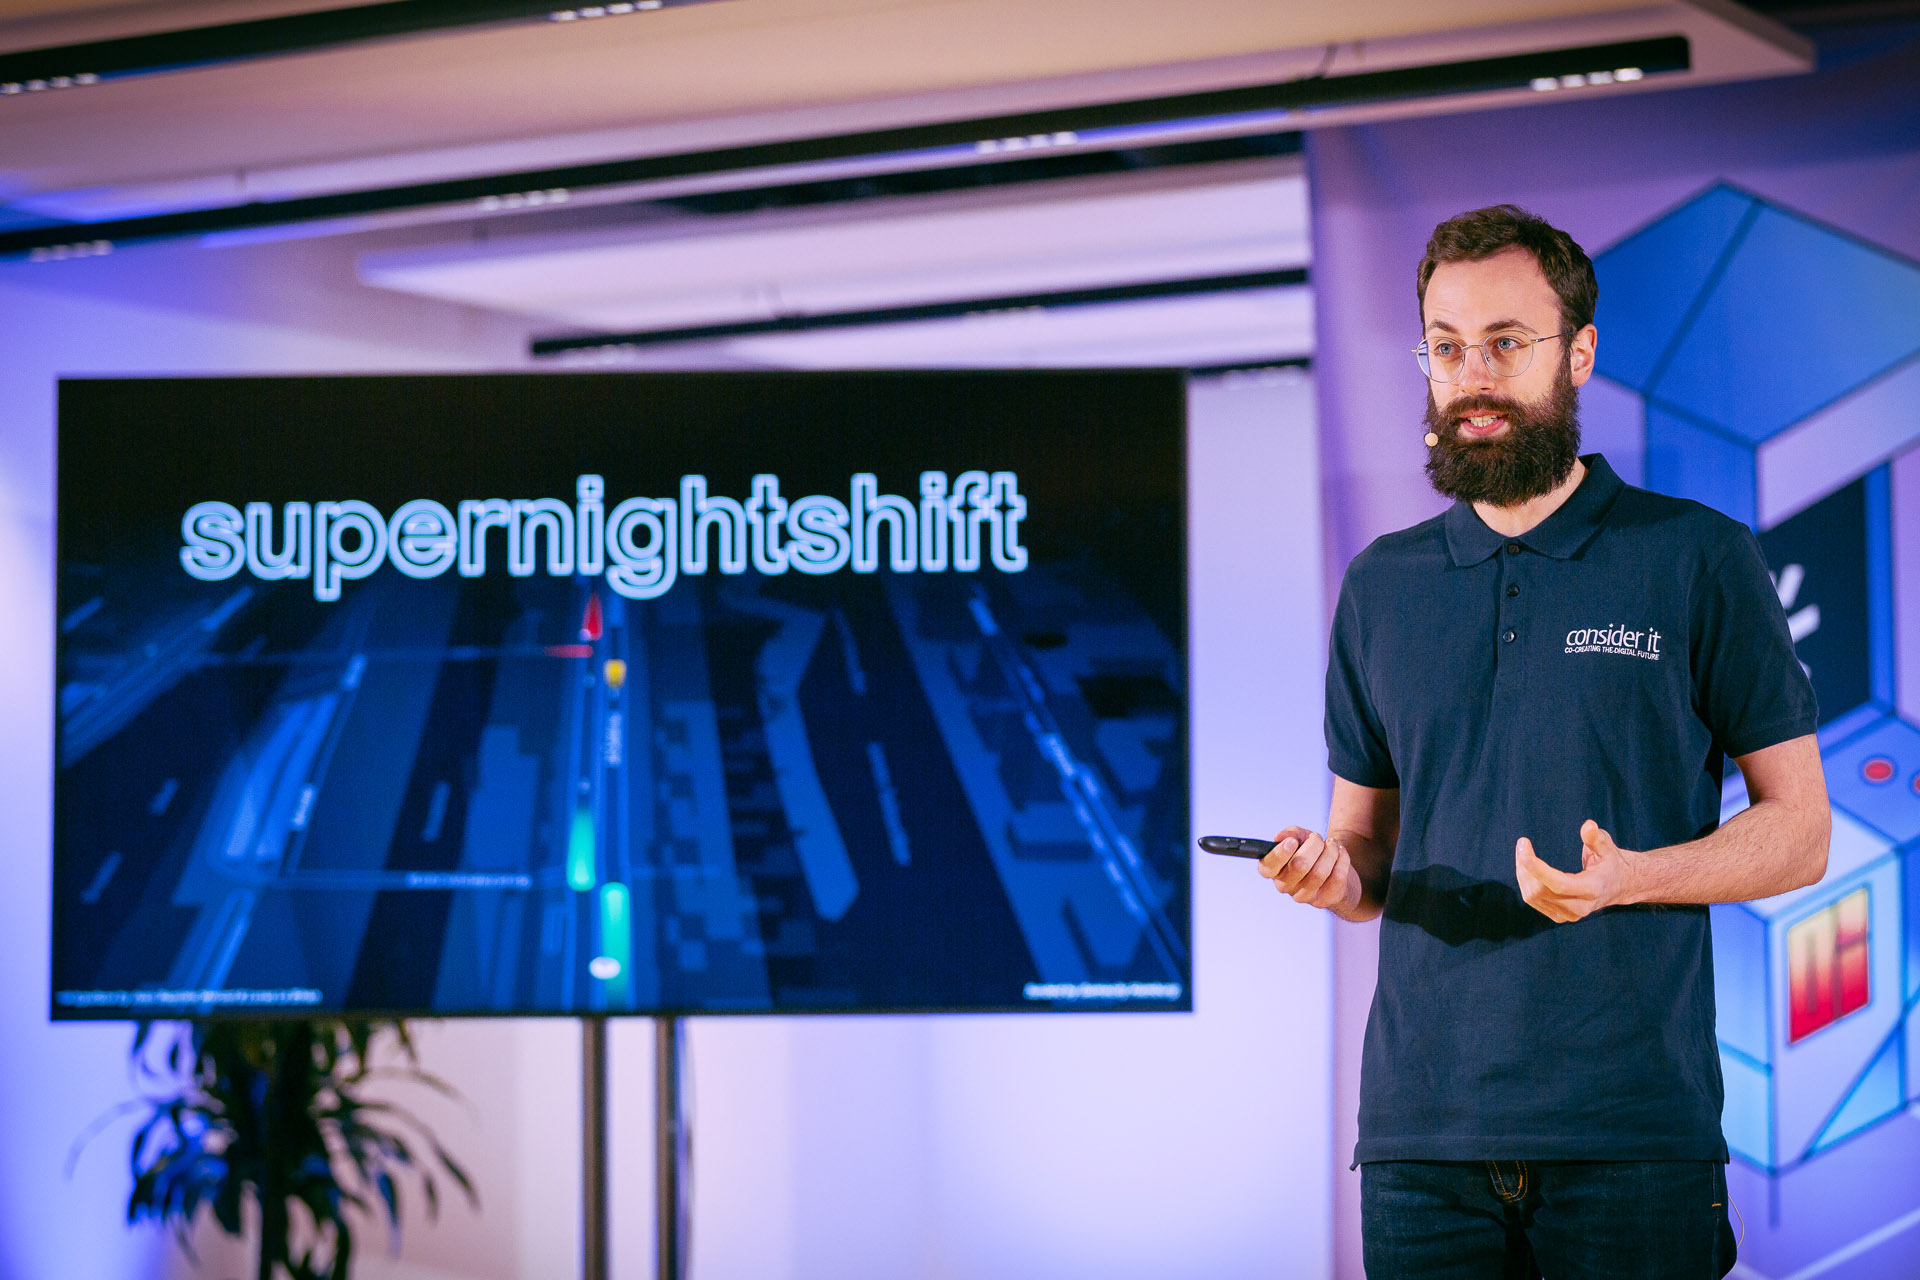 Timo Schneider from consider it presenting "supernightshift"